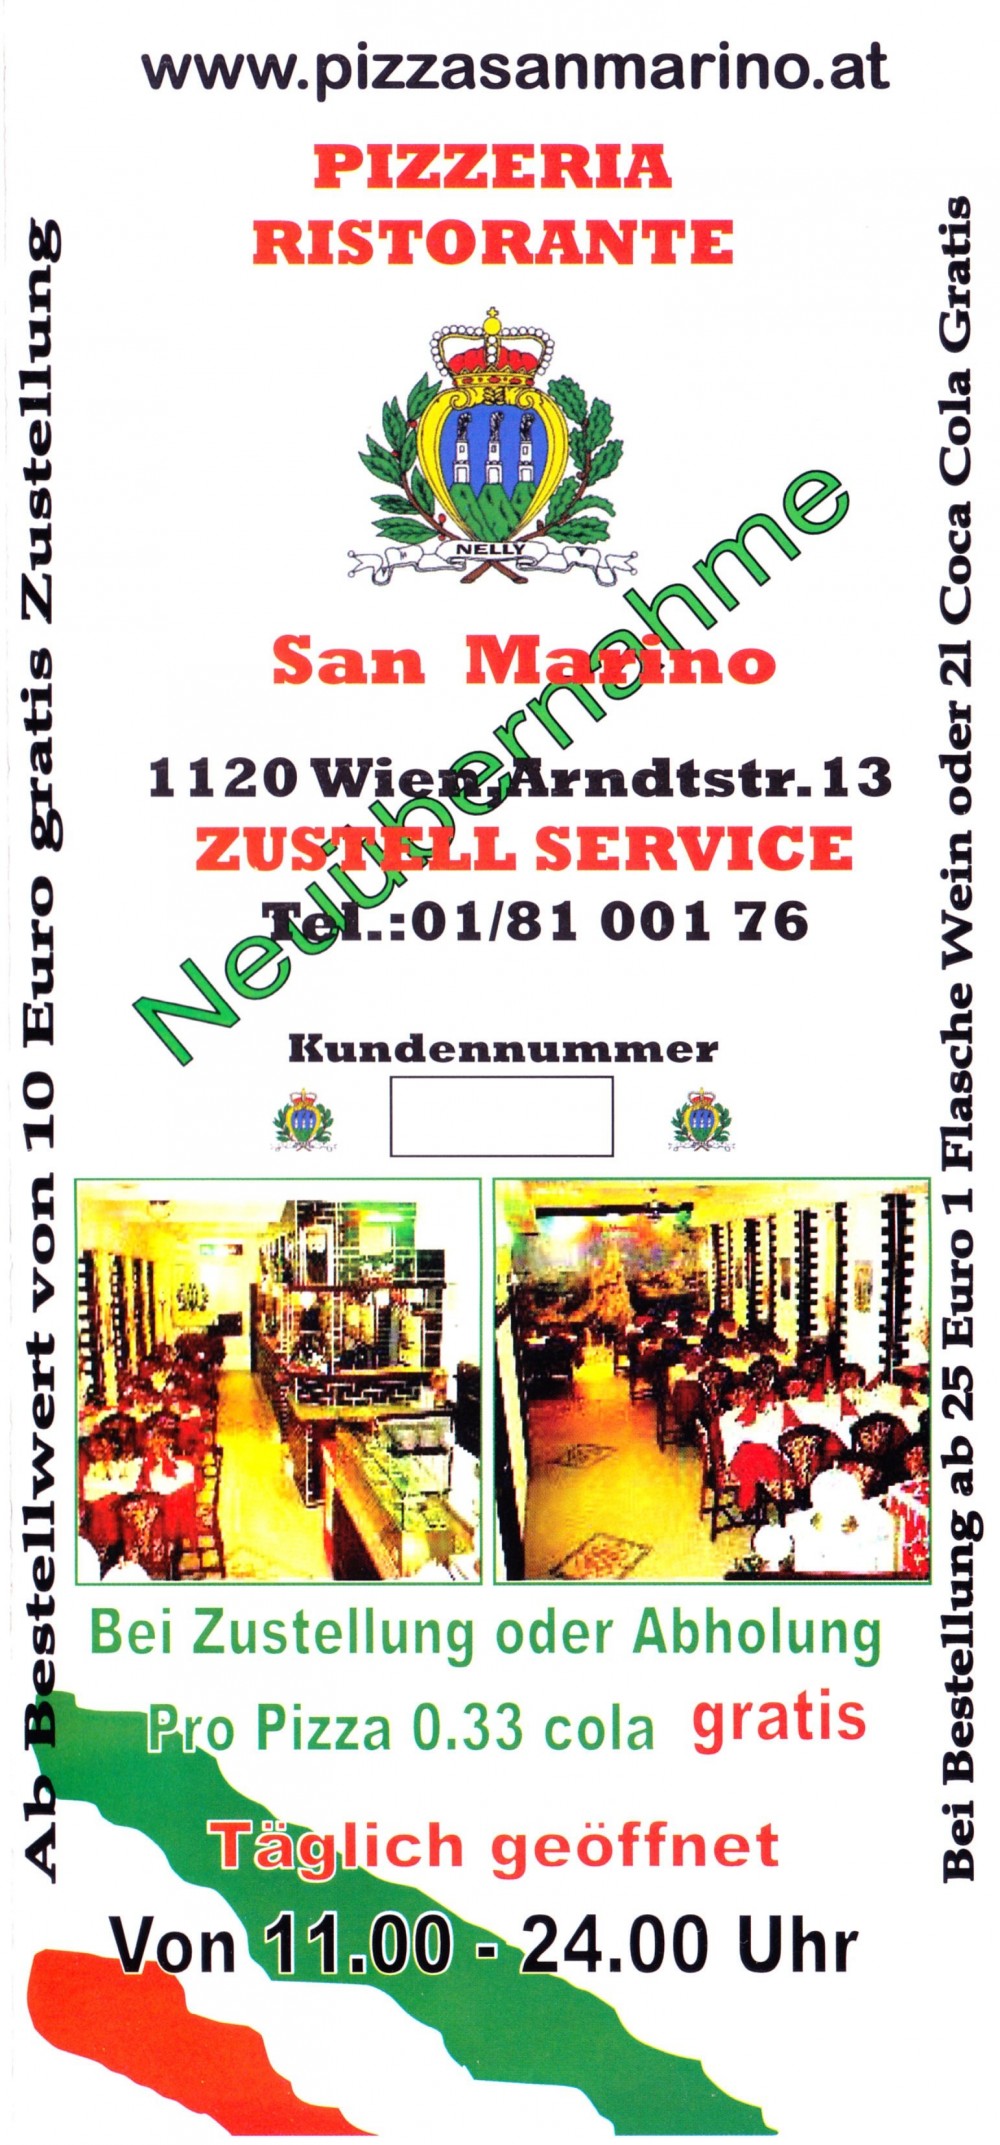 San Marino - Flyer Seite 01 - Pizzeria Ristorante San Marino - Wien